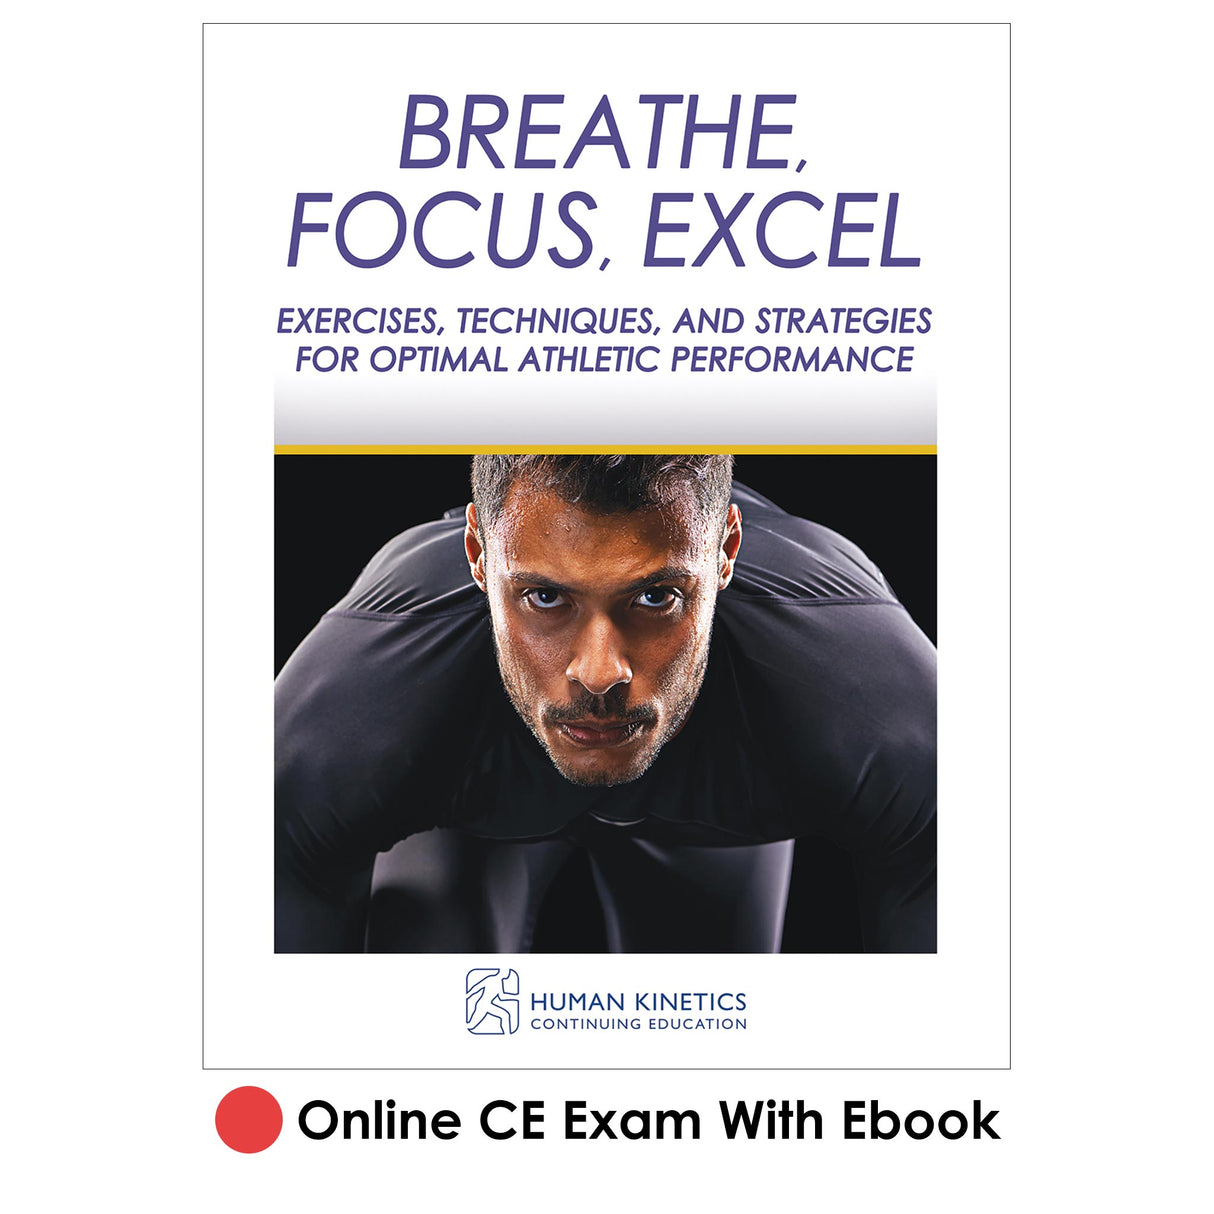 Breathe, Focus, Excel Online CE Exam With Ebook